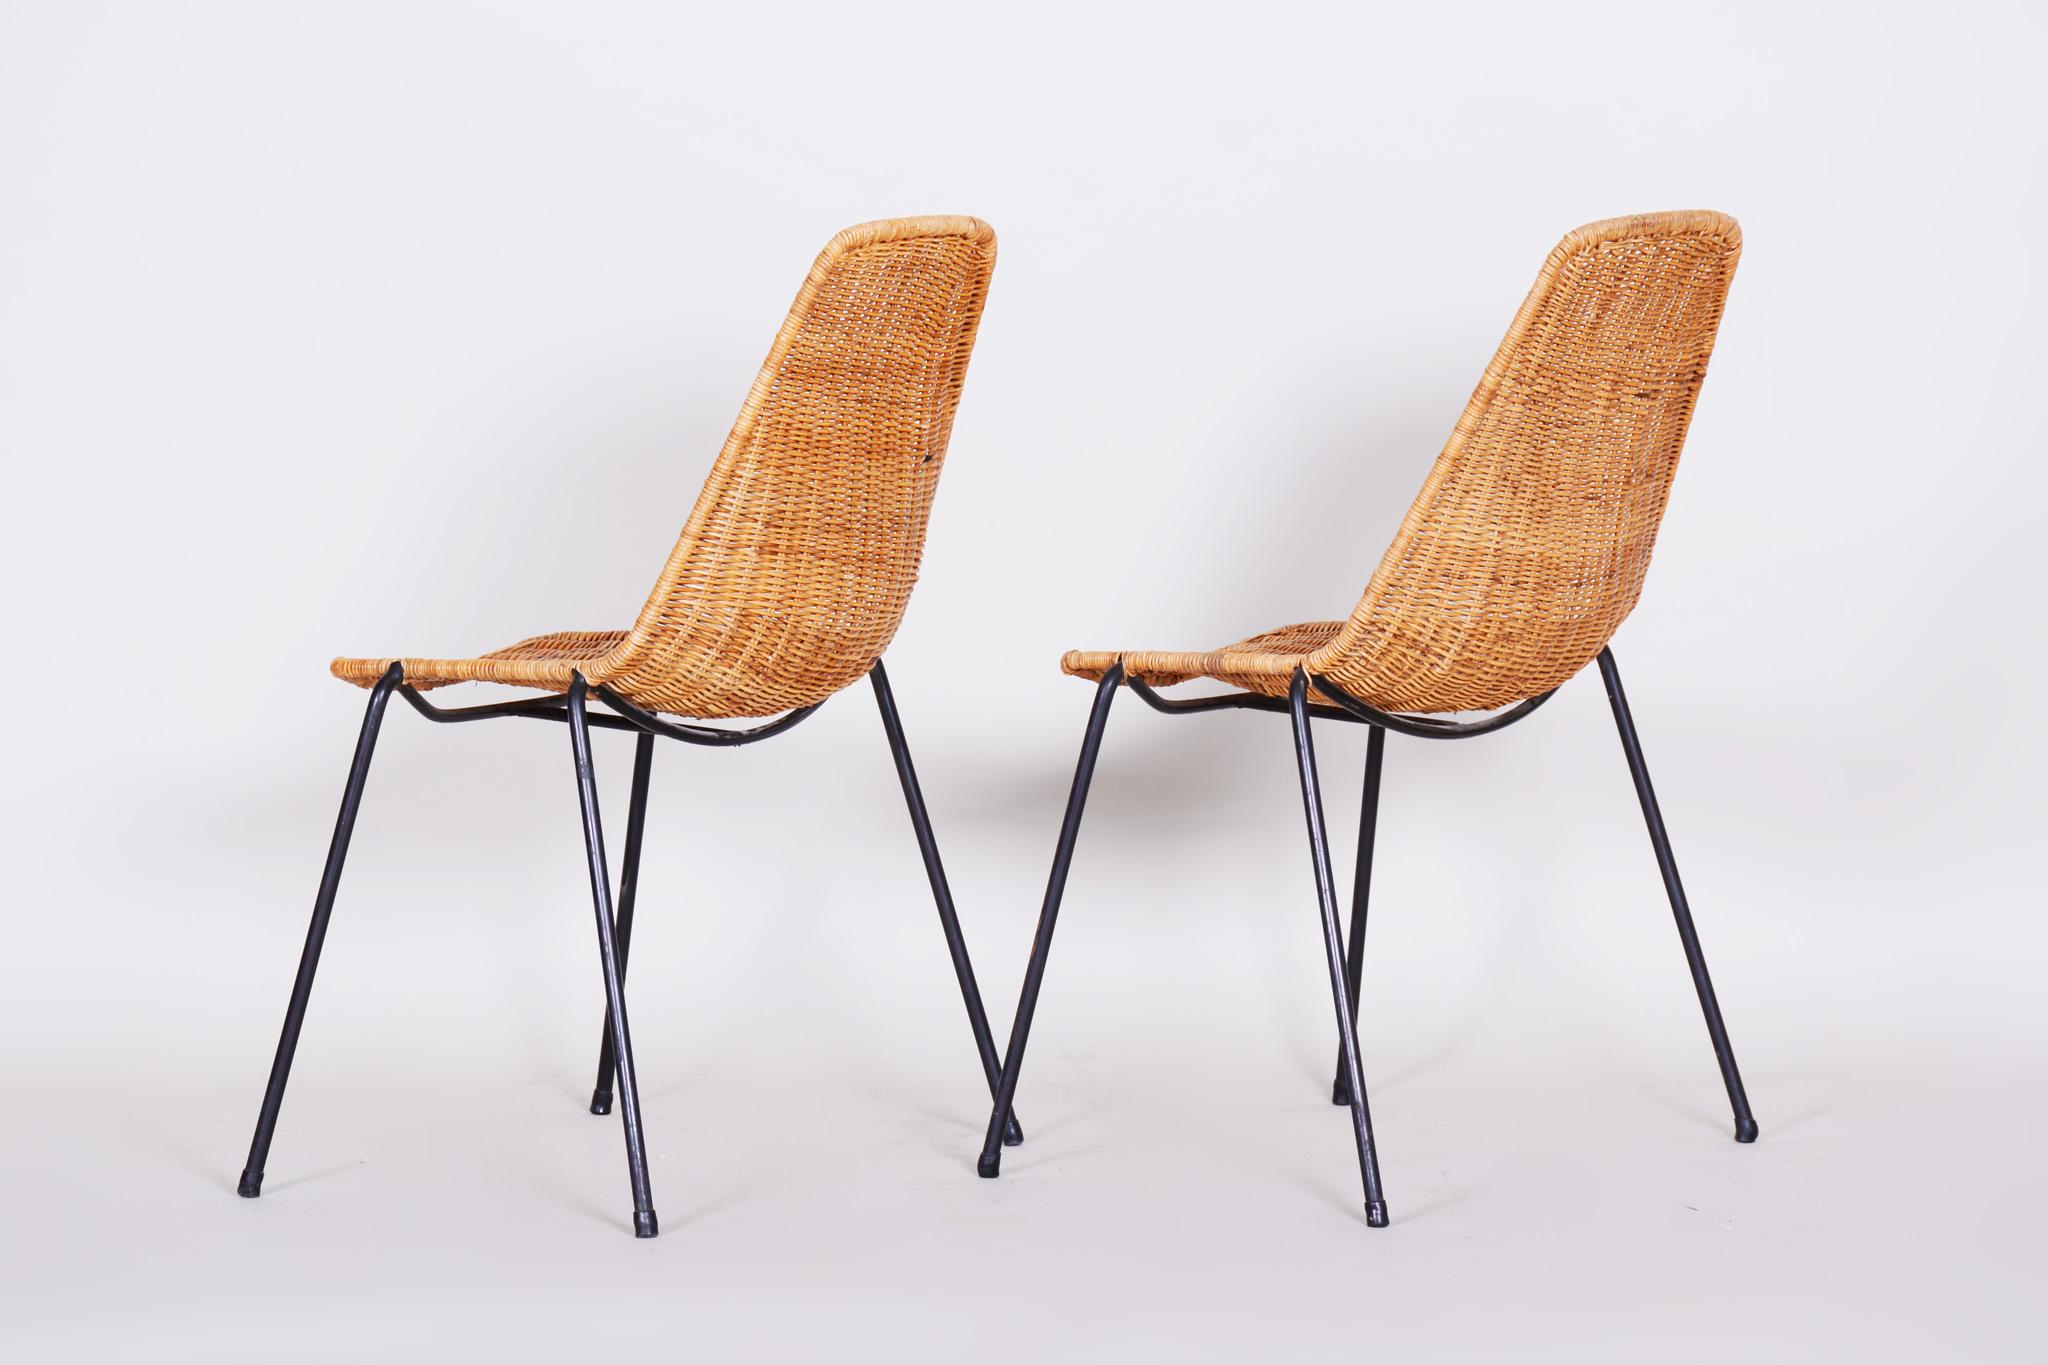 20th Century Pair of Scandinavian Midcentury Chairs, 1960s, Rattan-Metal, Original Condition